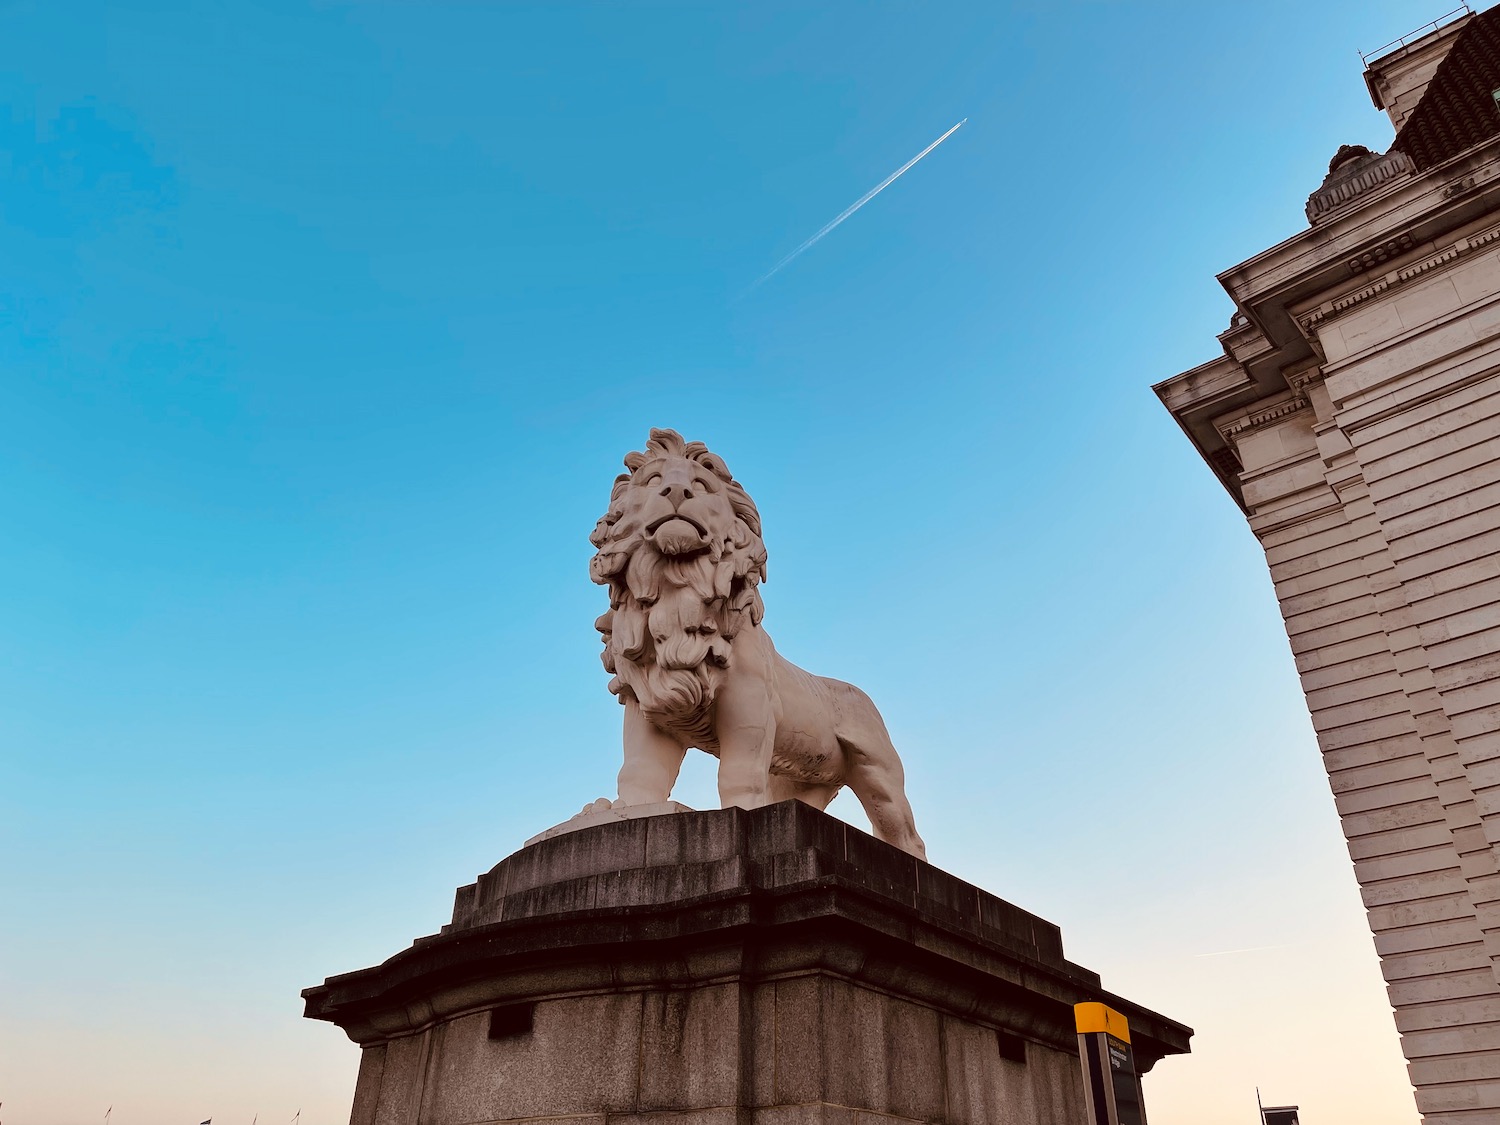 a statue of a lion on a stone pedestal